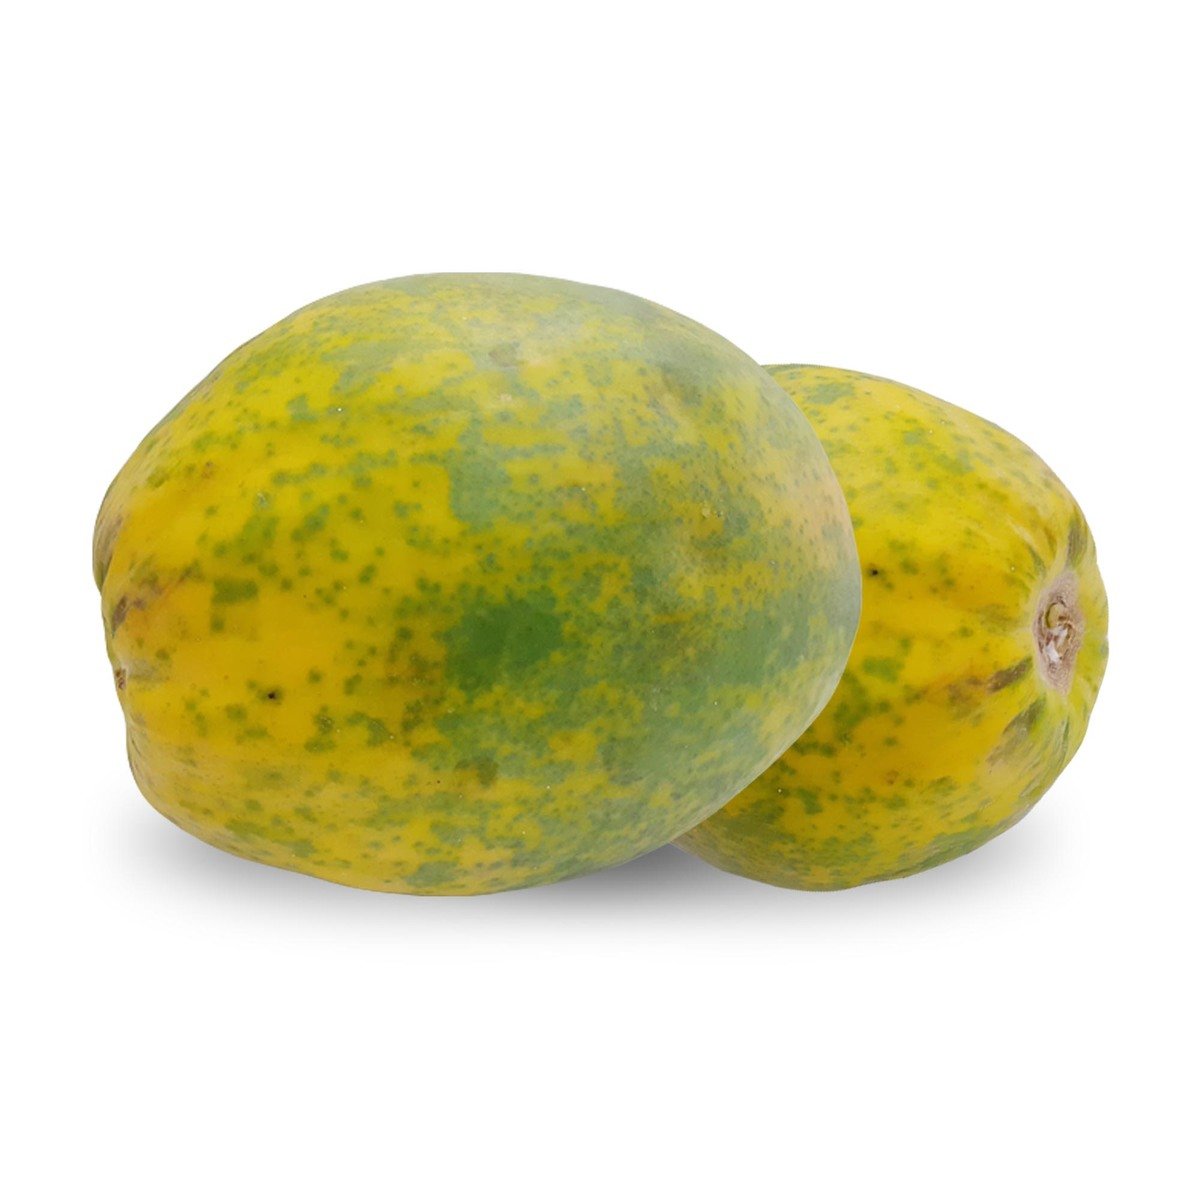 Solo Papaya Sri Lanka 1kg